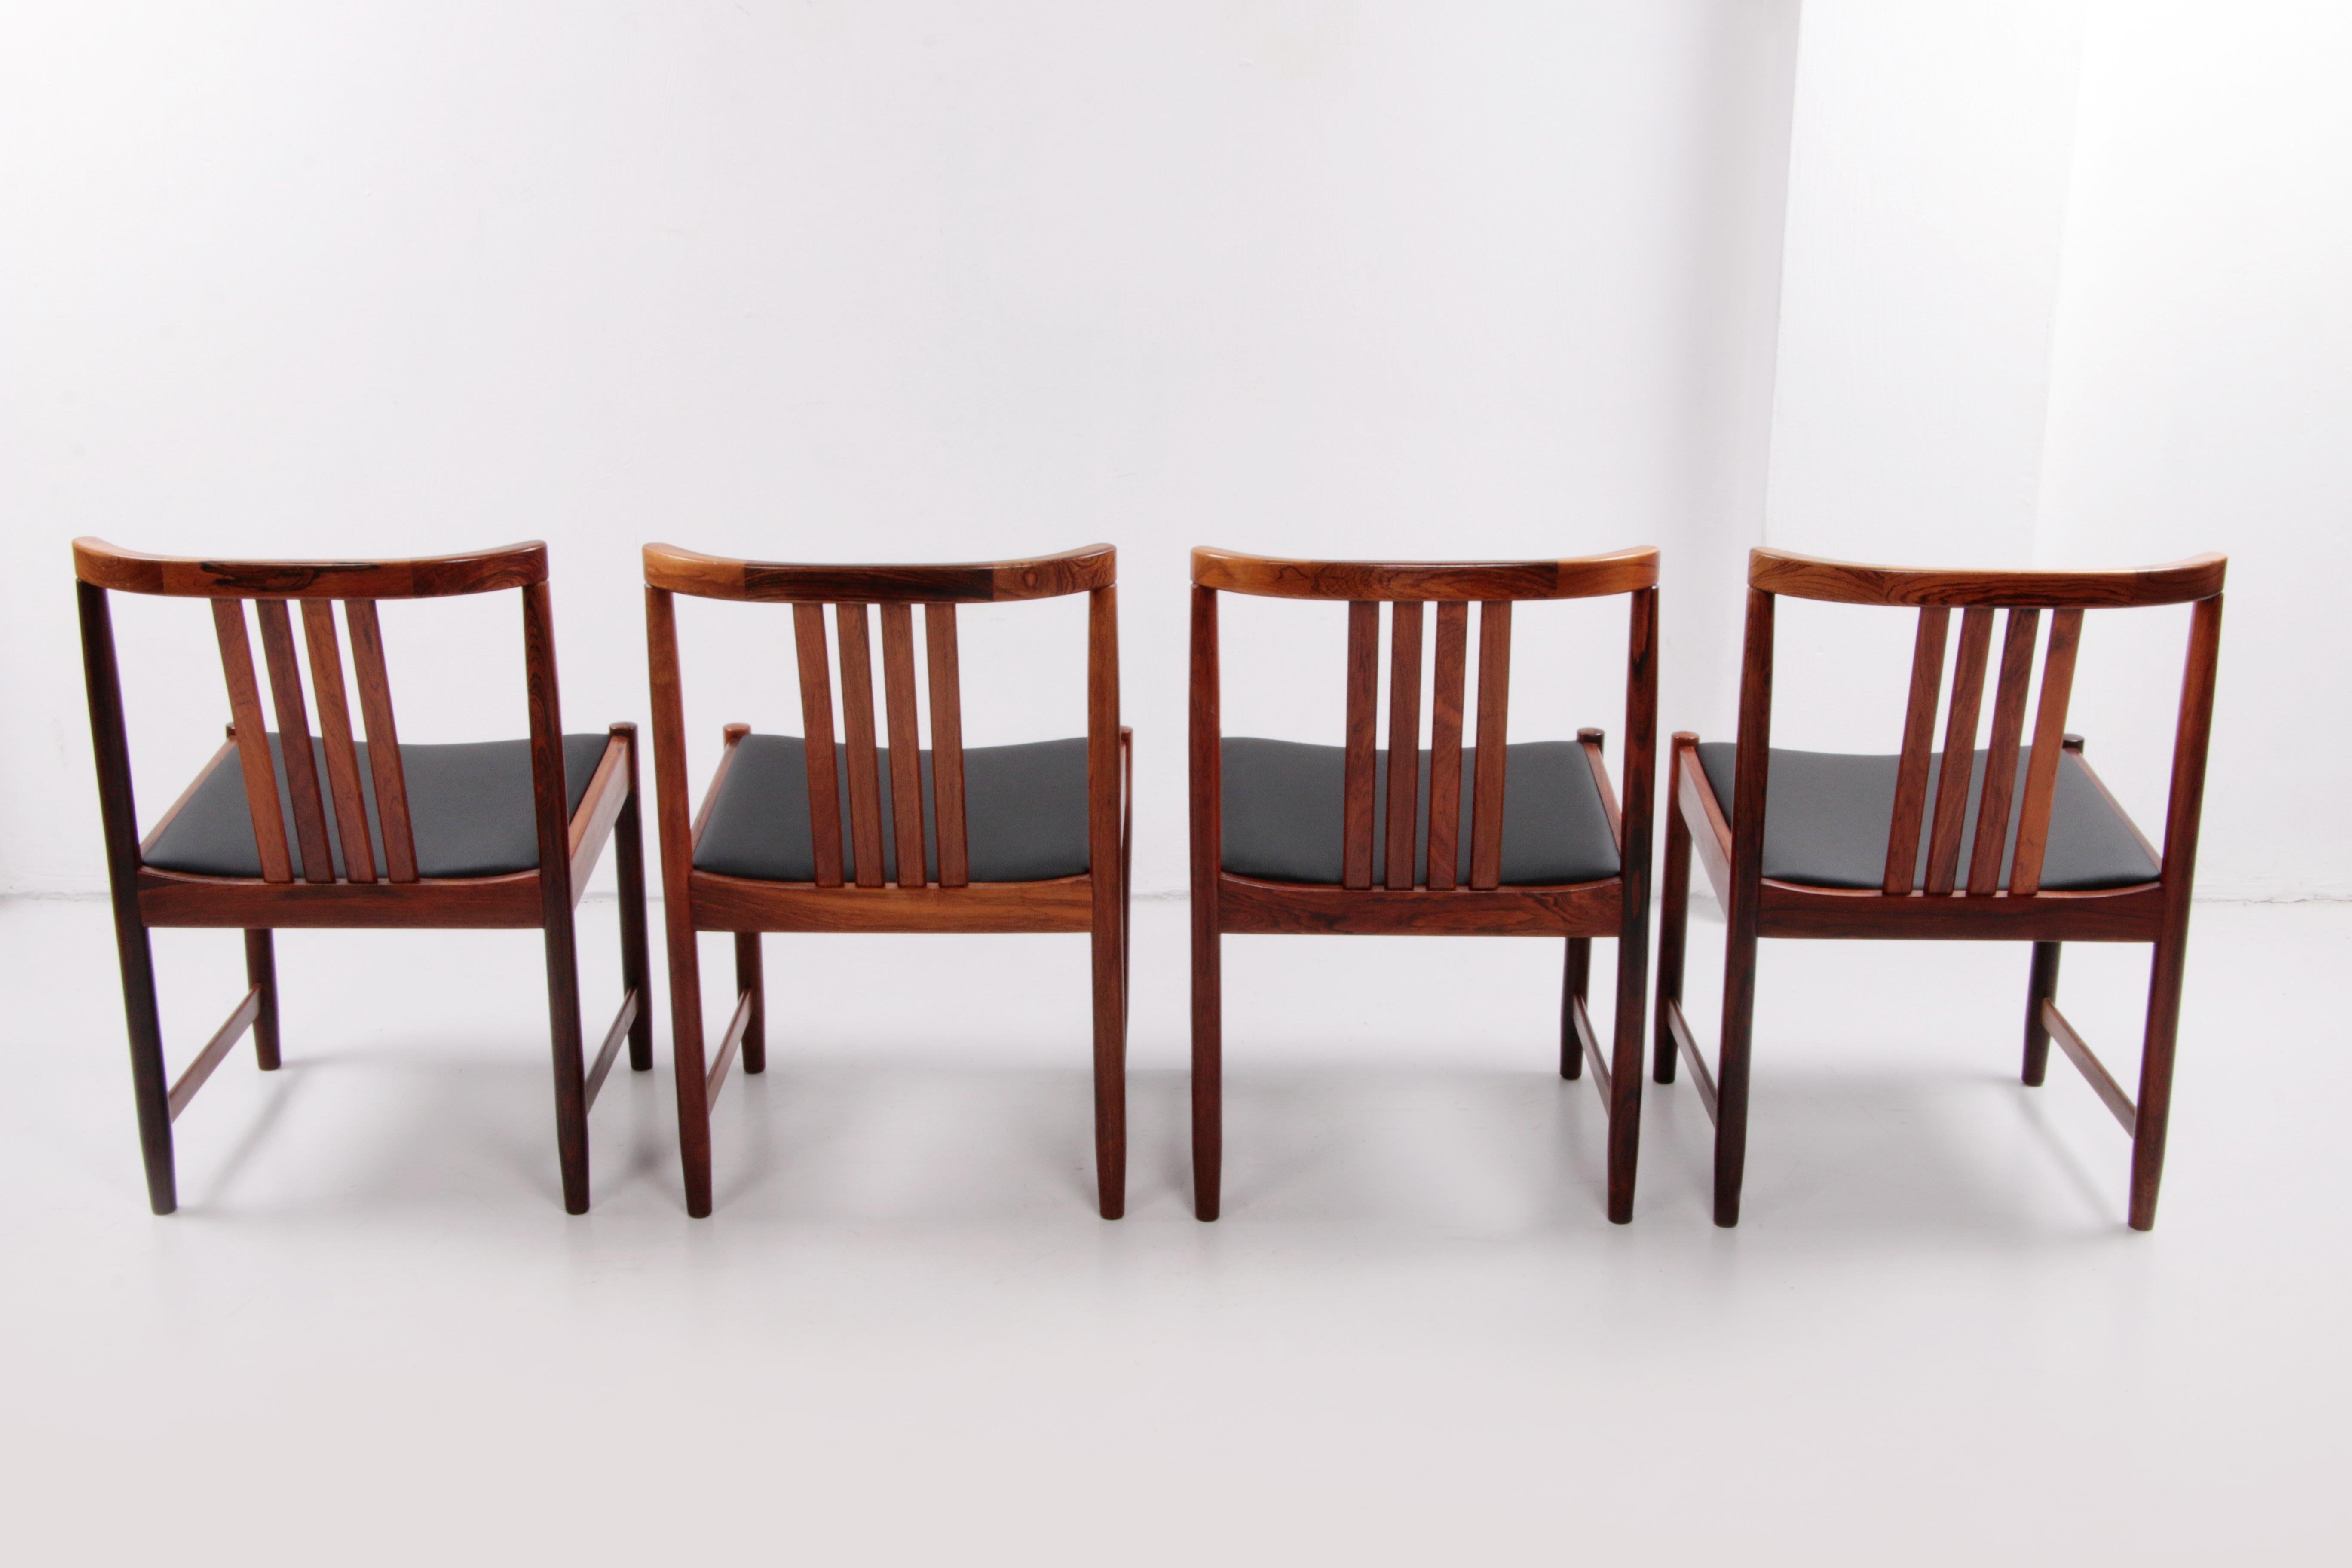 Mid-20th Century Dinner Chairs Design by Illum Wrapsø 1960 Denmark For Sale